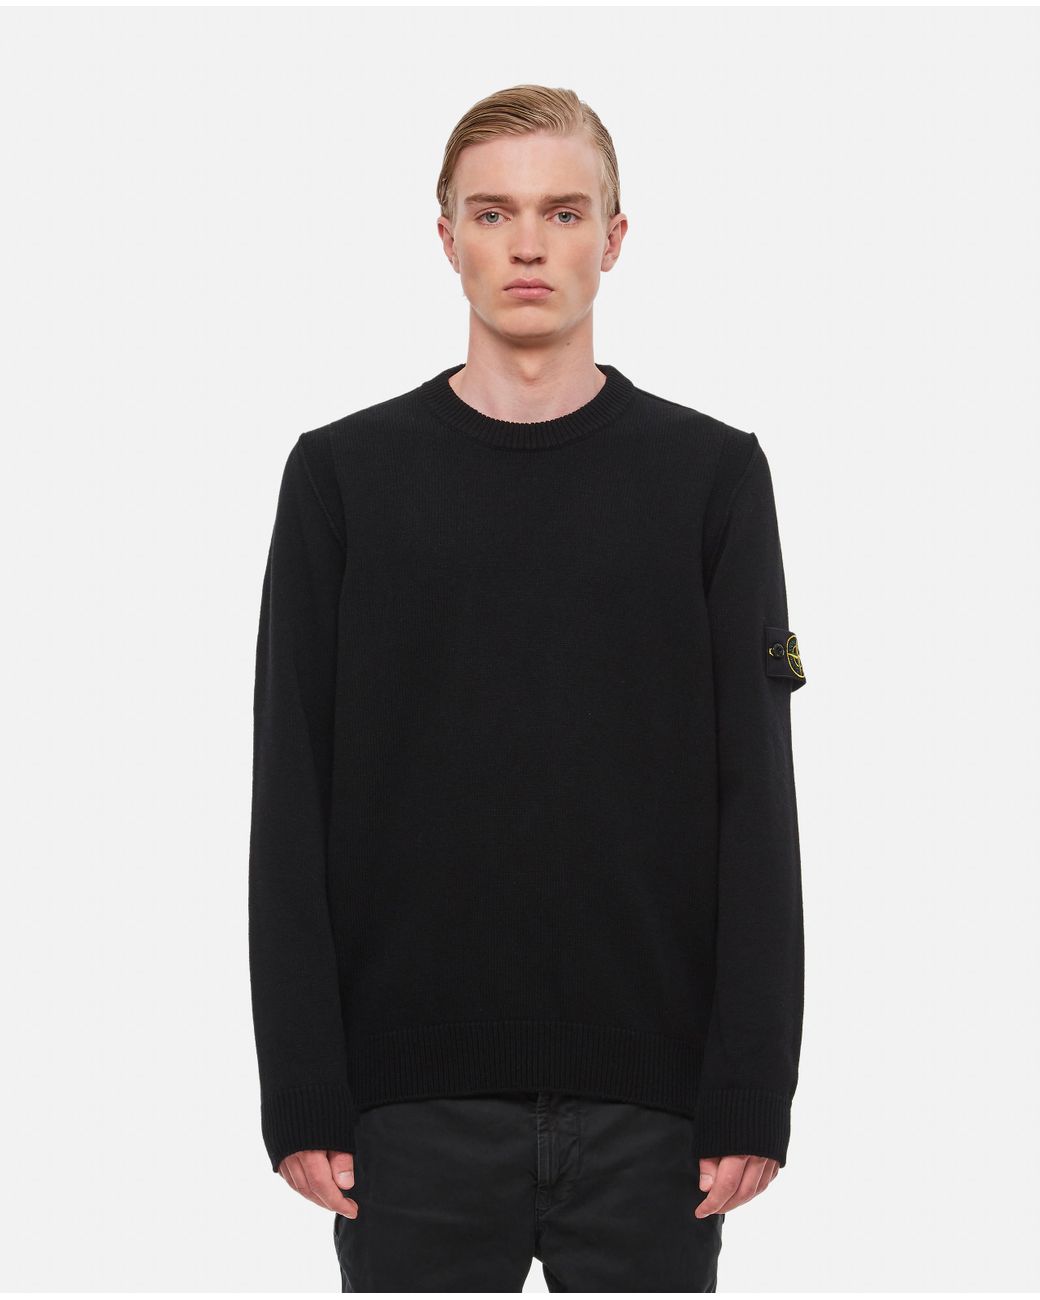 Stone Island Wool Sweater in Black for Men | Lyst